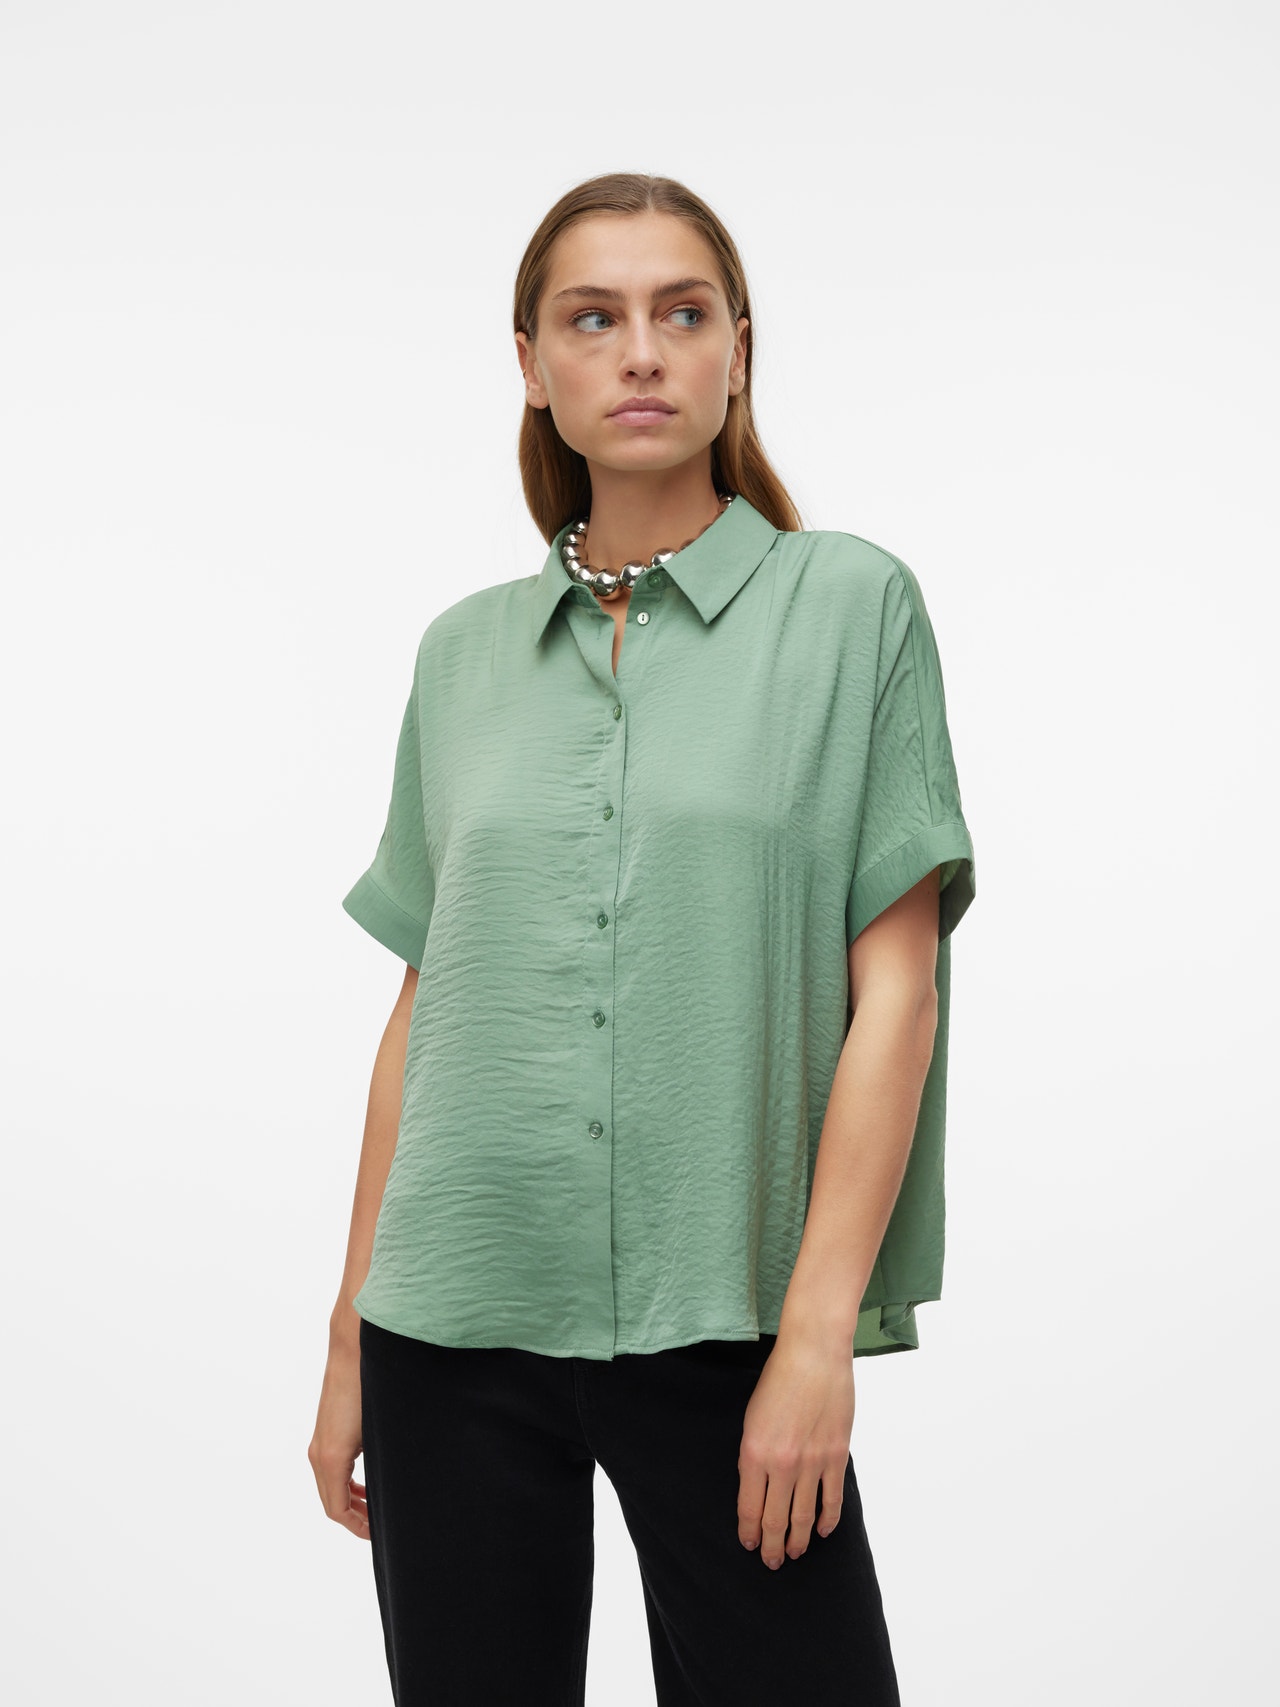 Vero Moda VMKATRINE Shirt -Hedge Green - 10298789